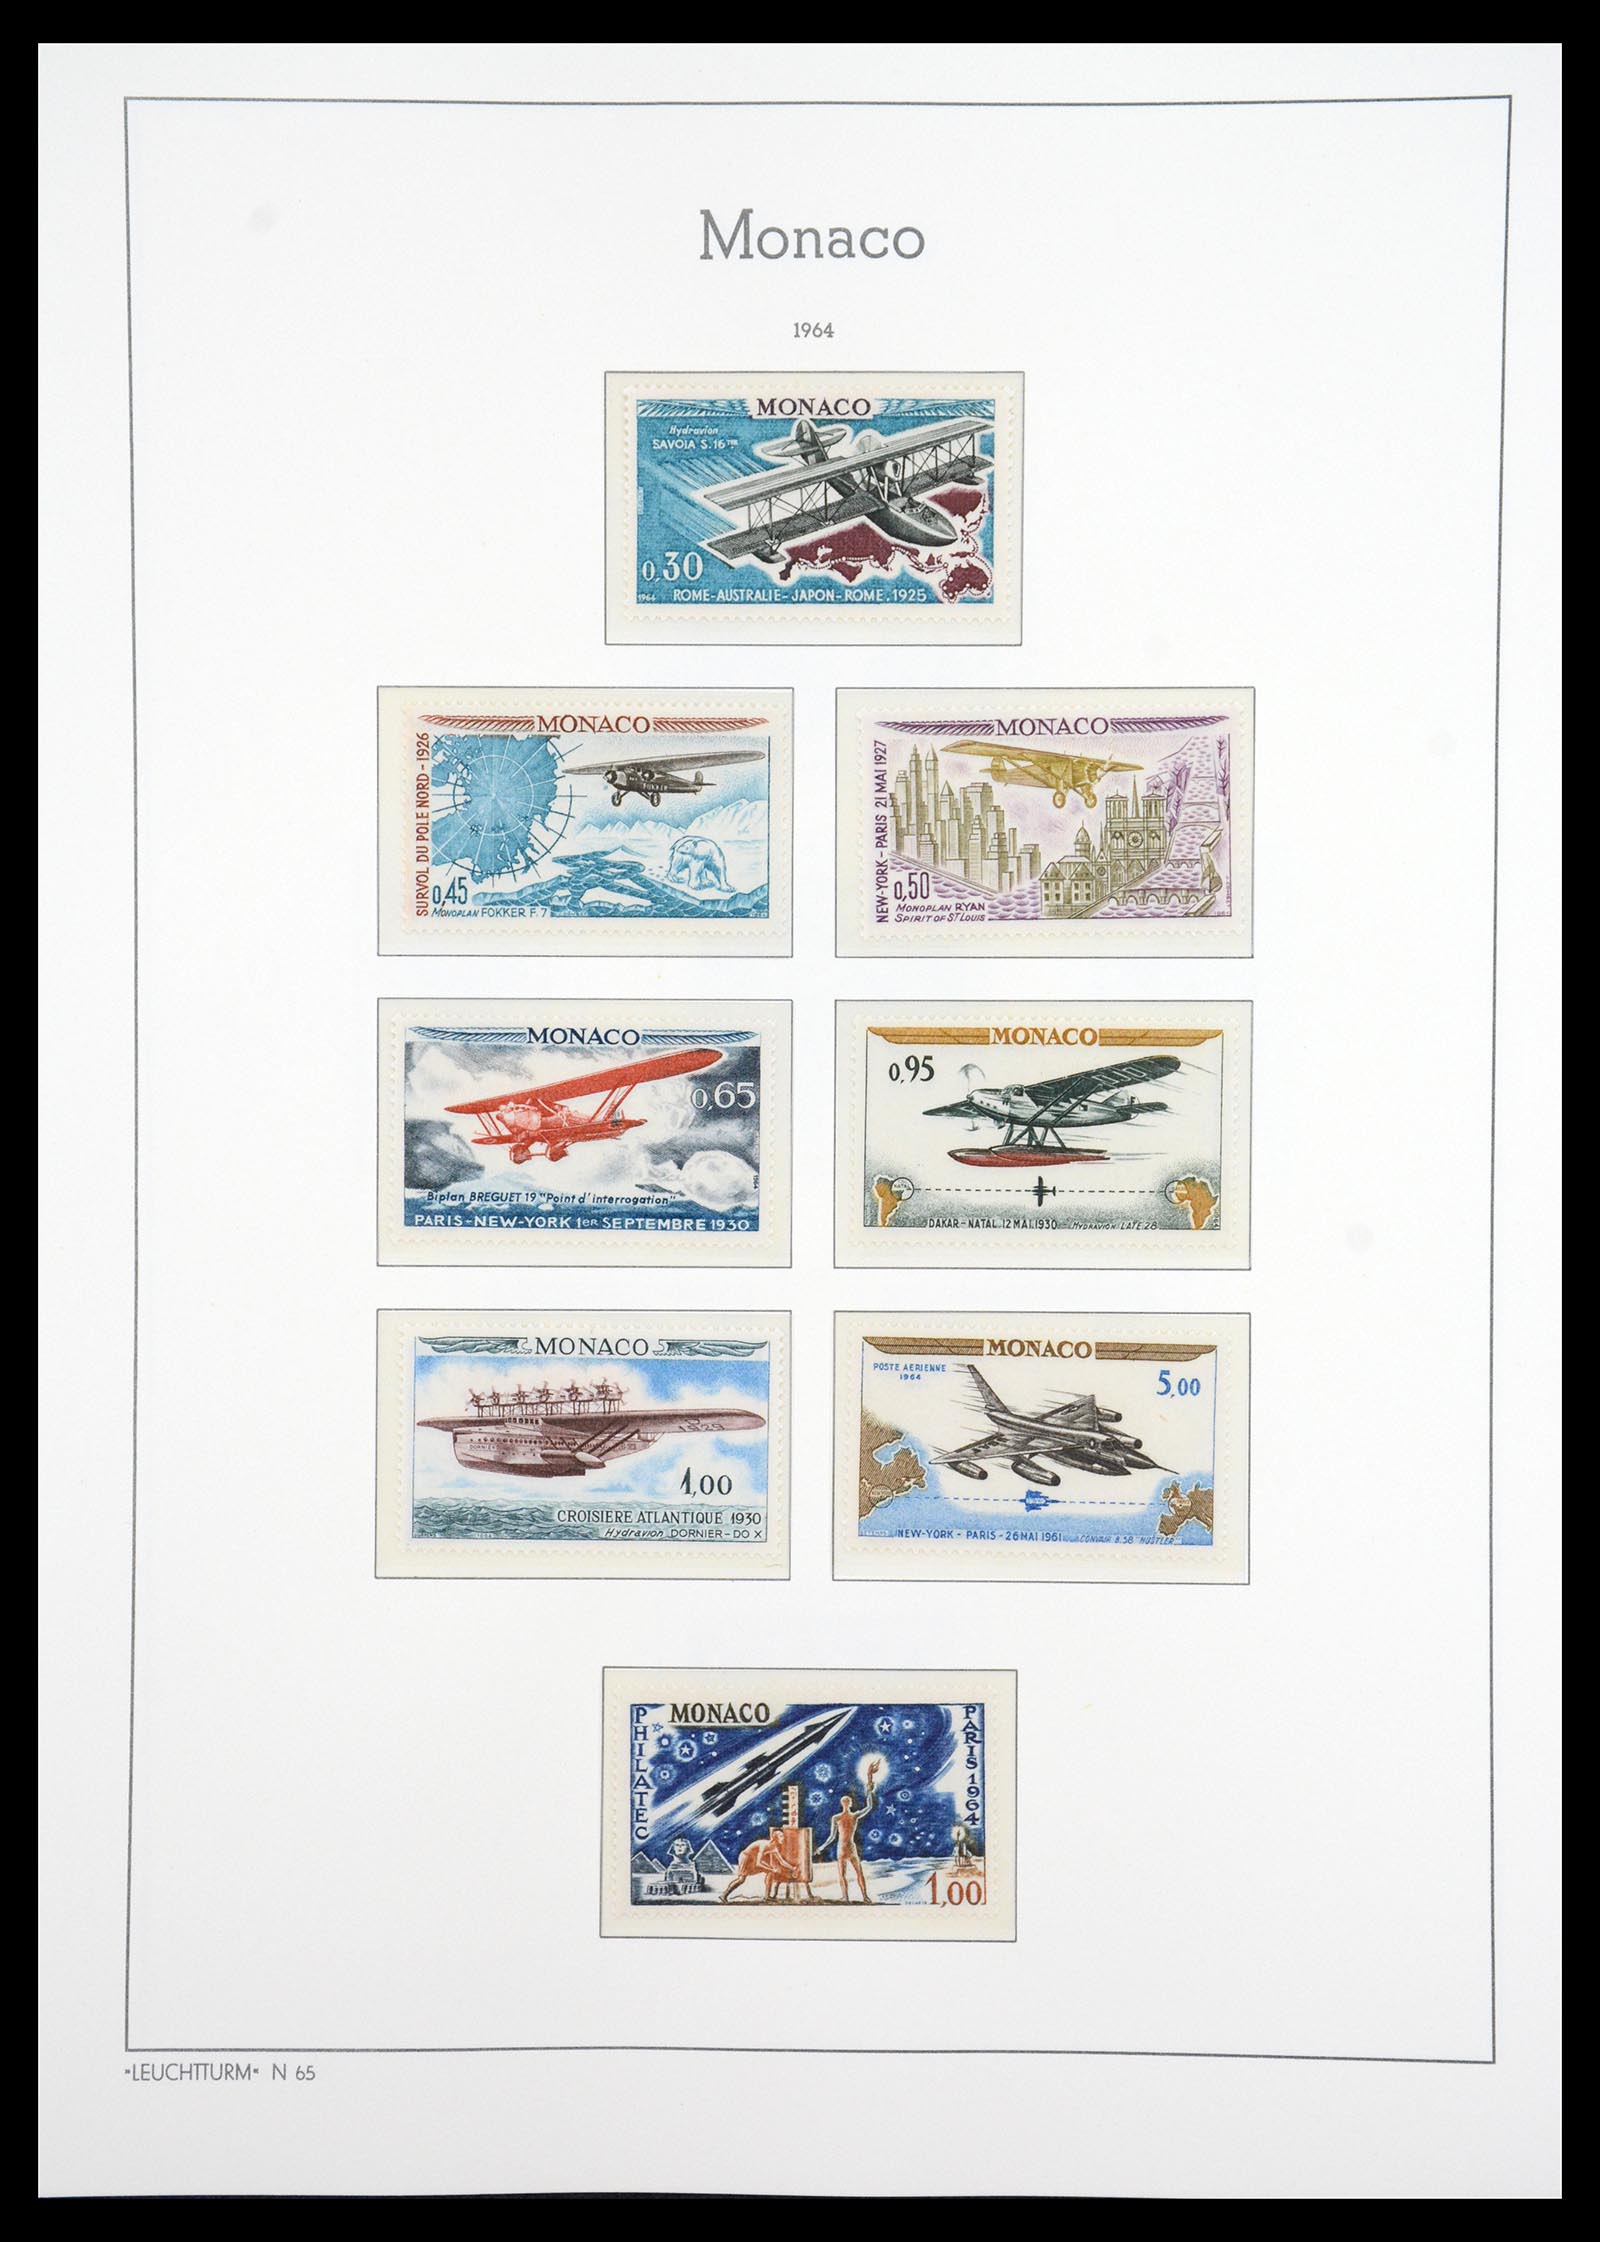 36735 086 - Stamp collection 36735 Monaco 1885-1966.